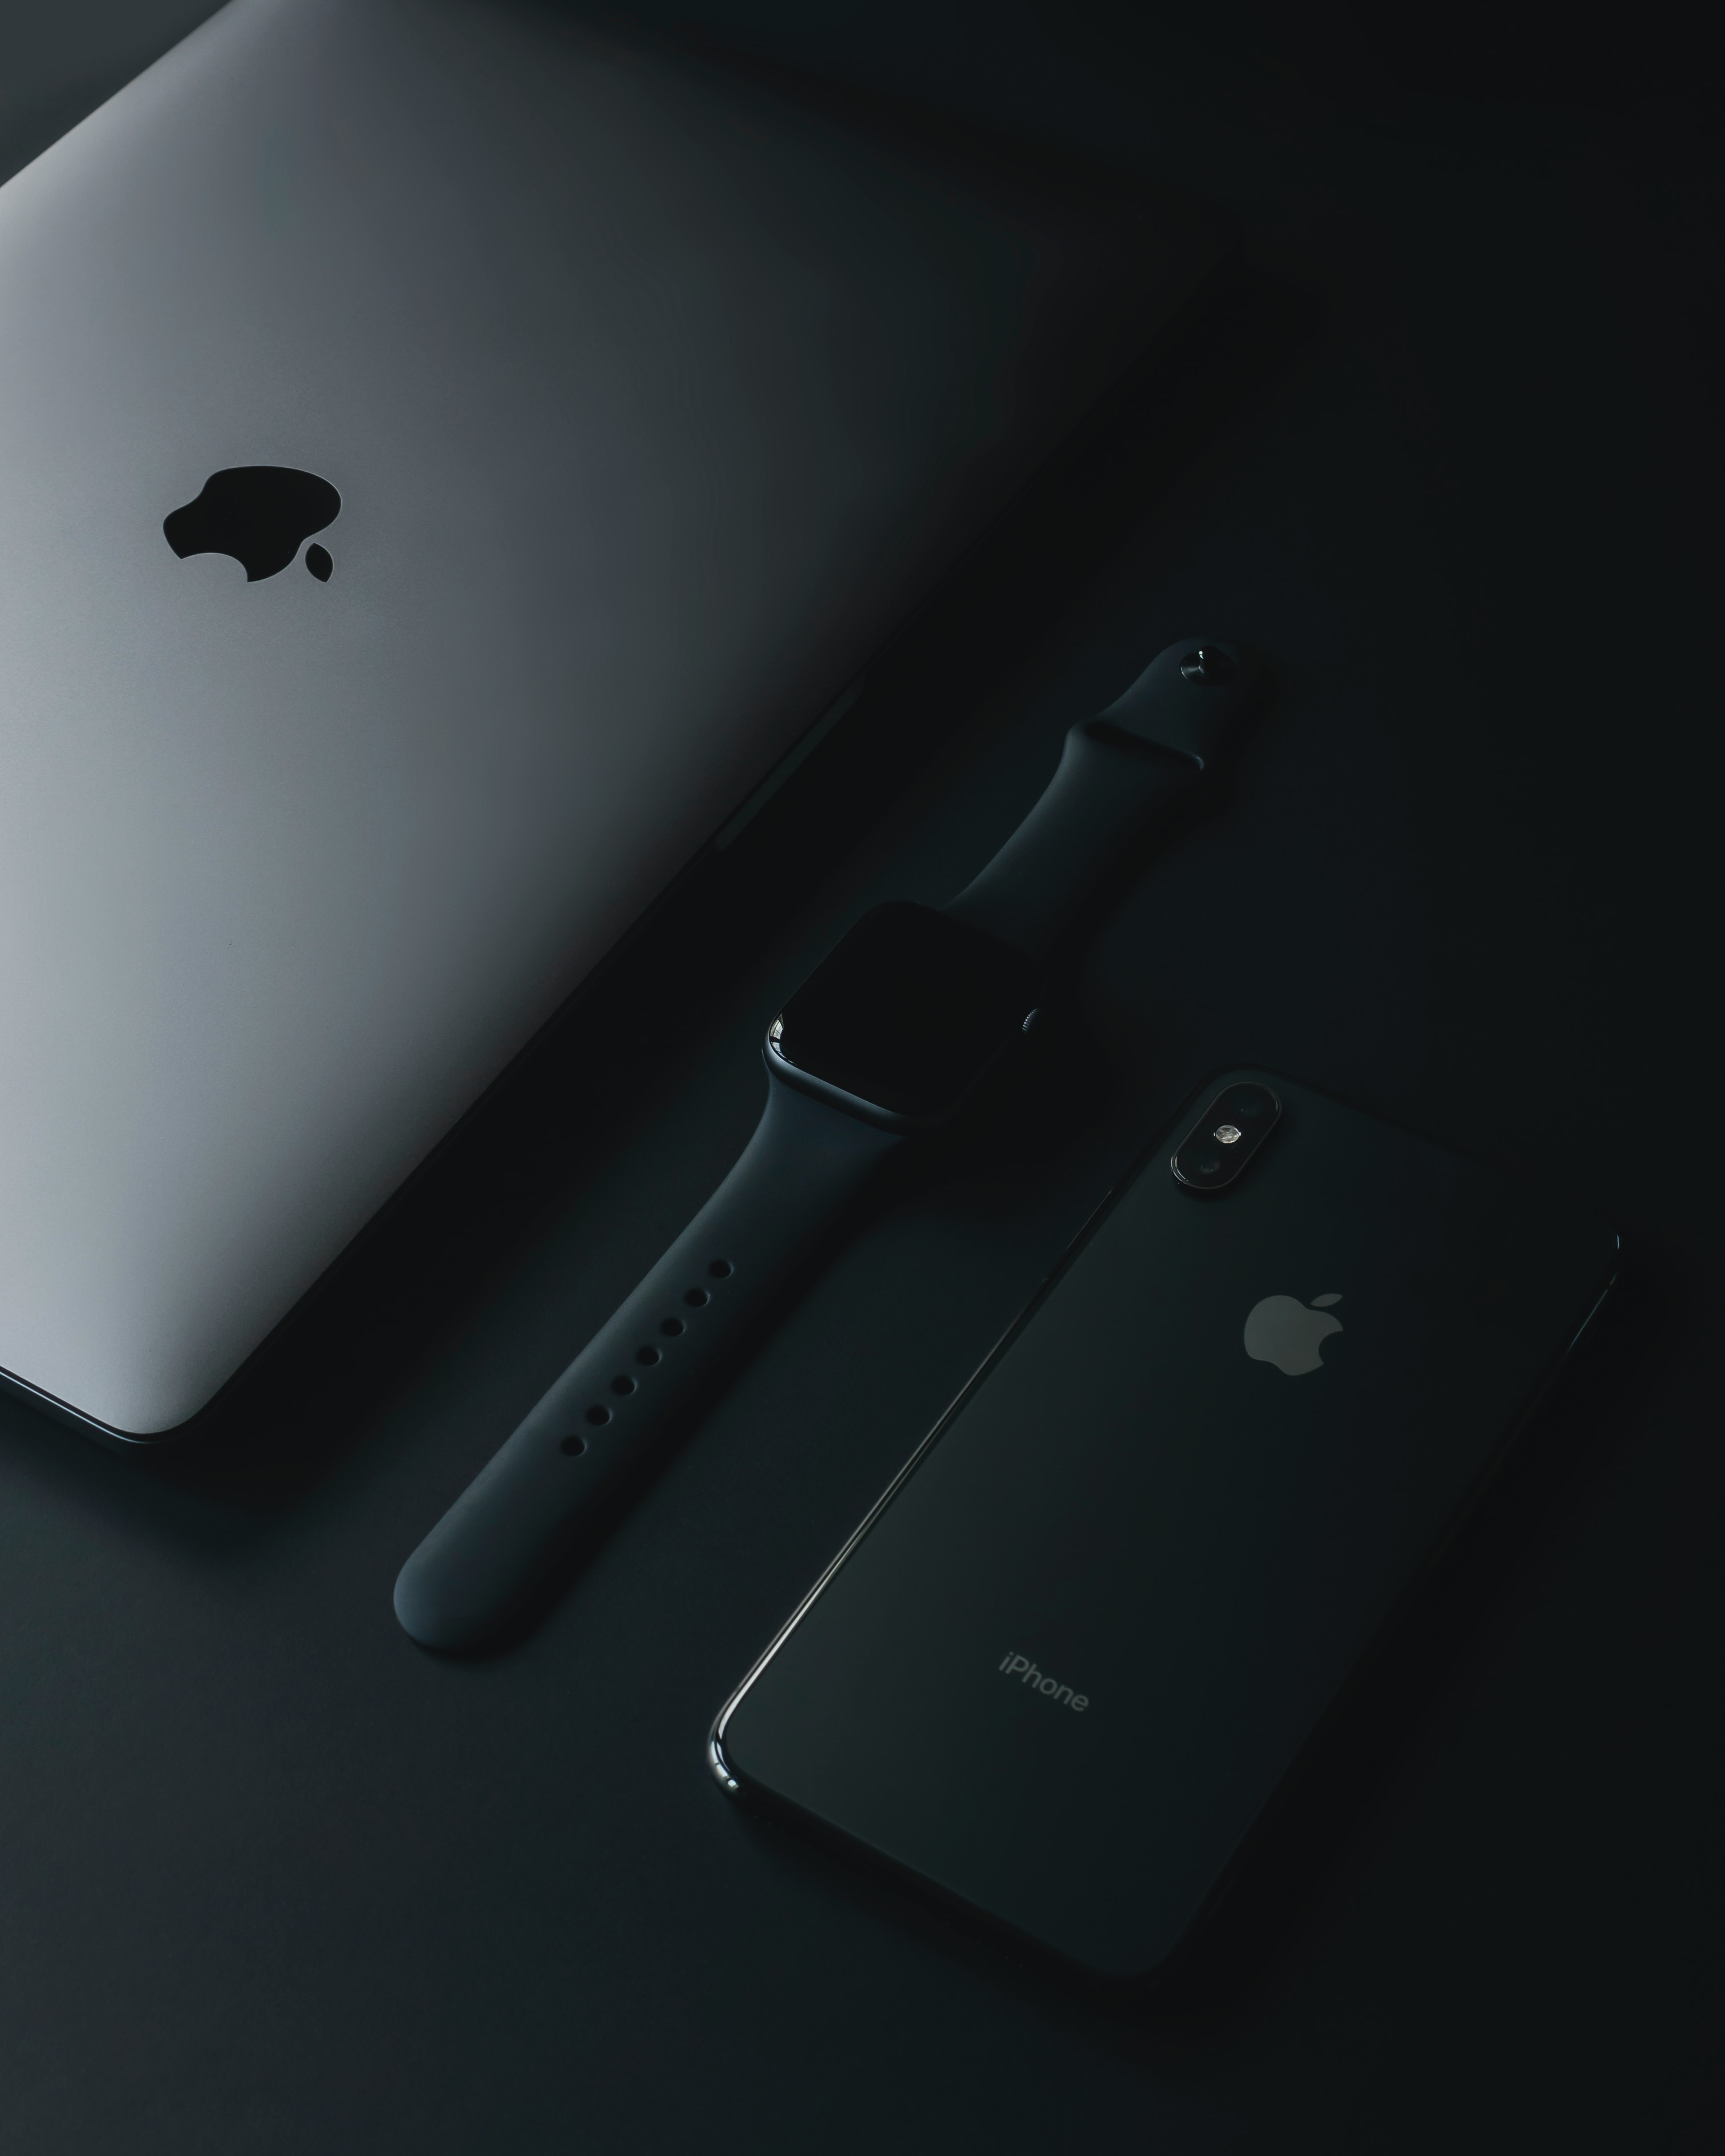 Apple Macbook, Apple Watch, Iphone on a black background.